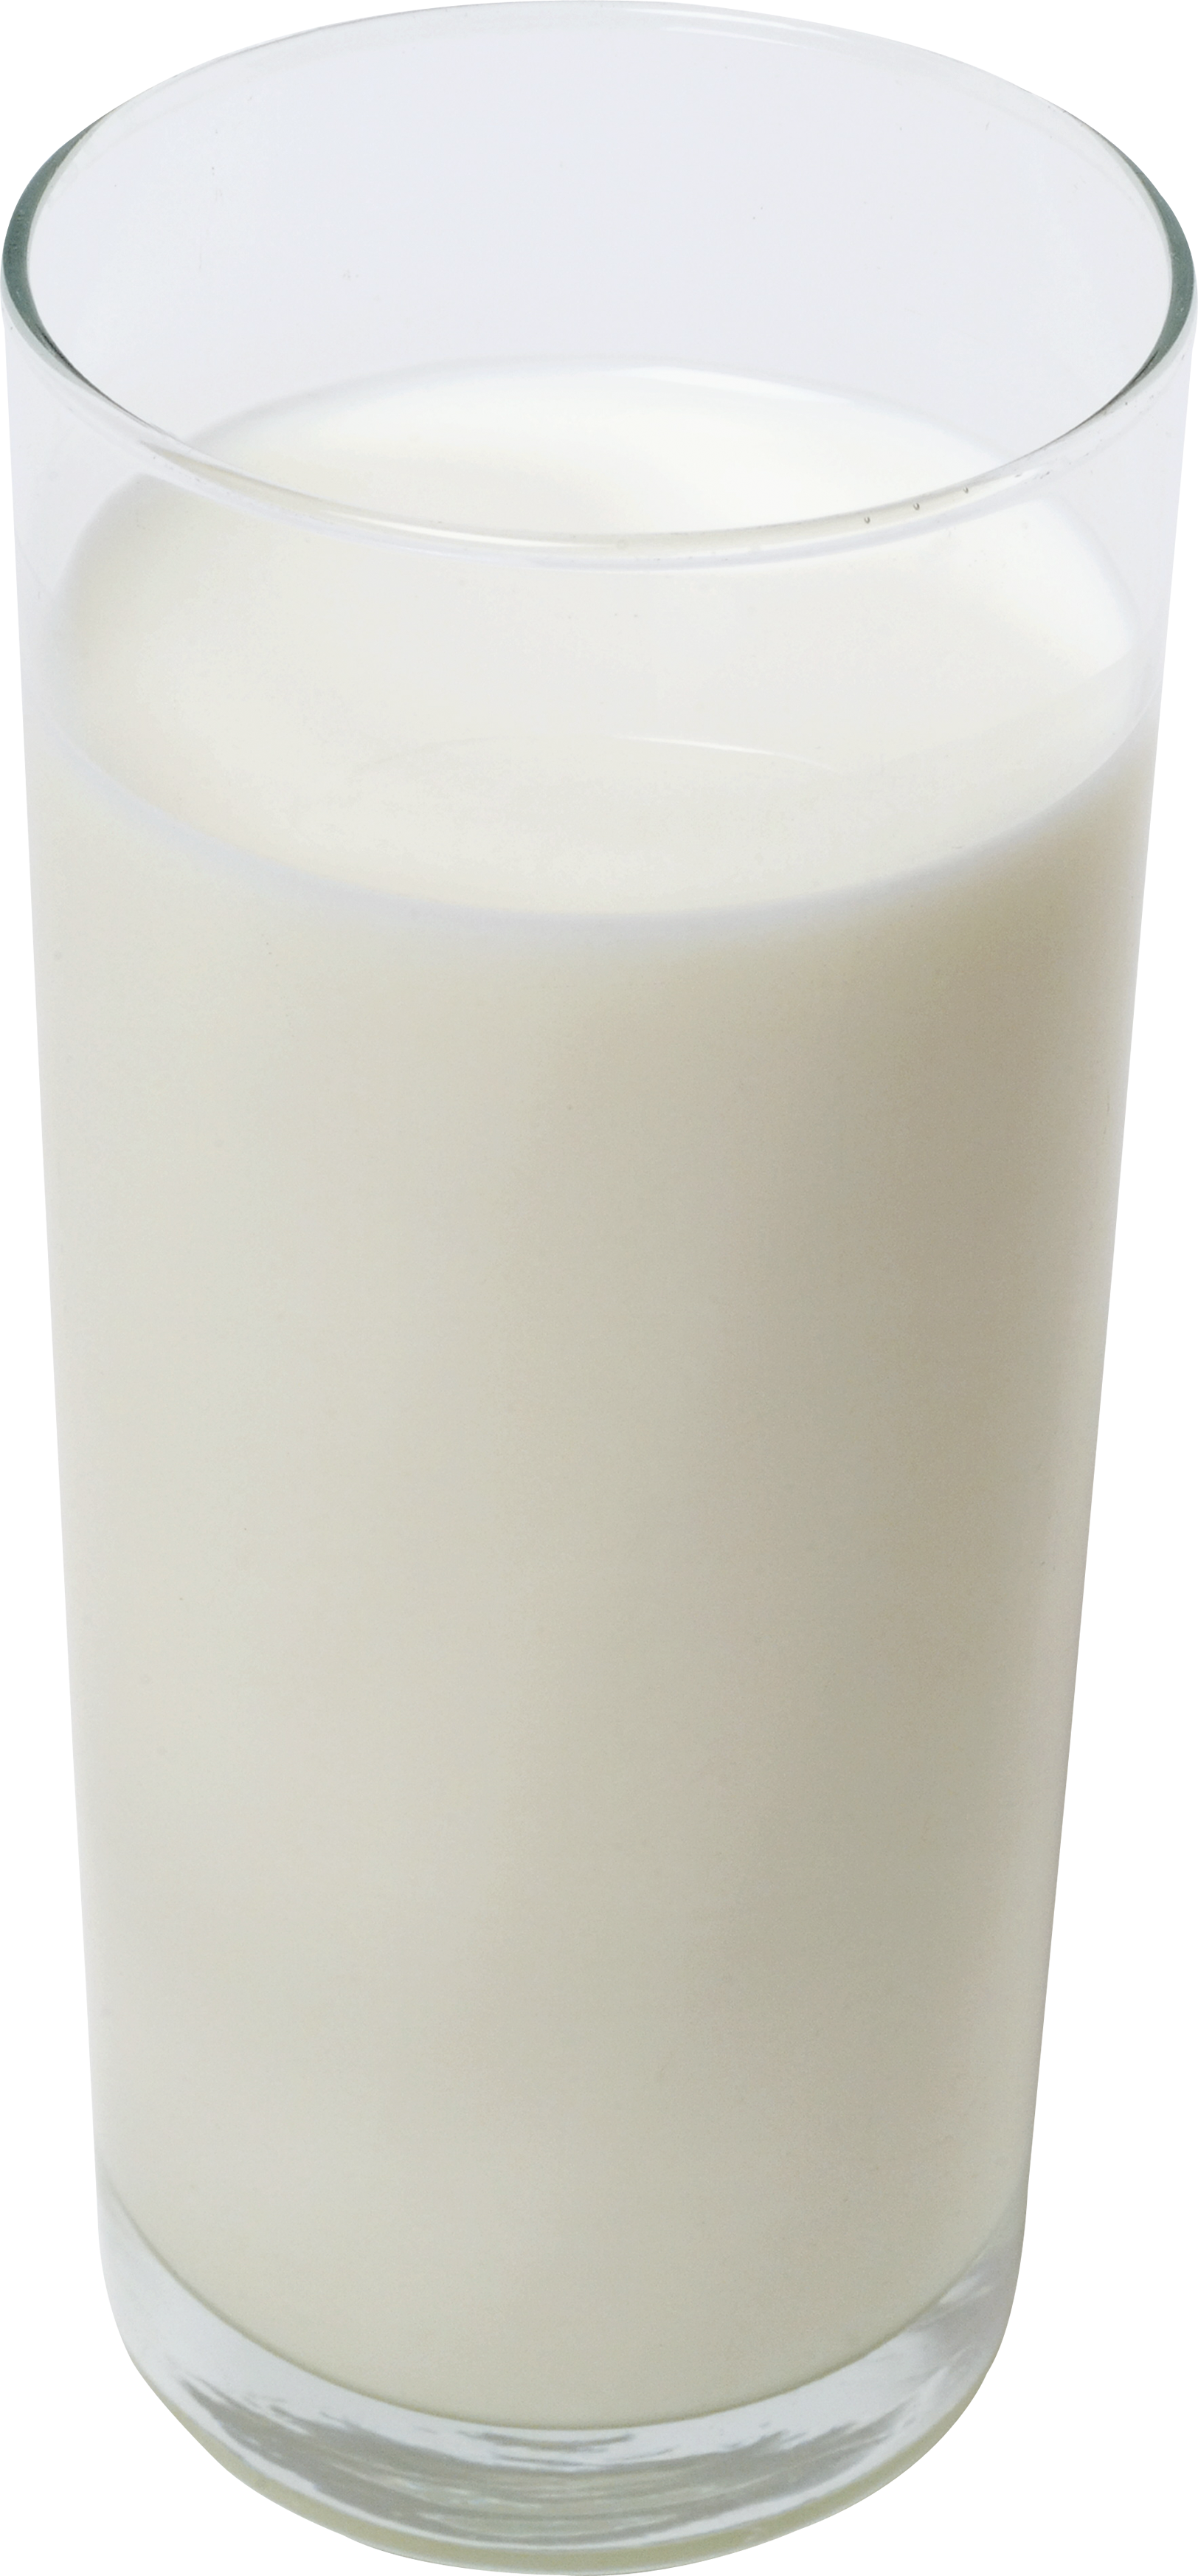 clipart food milk